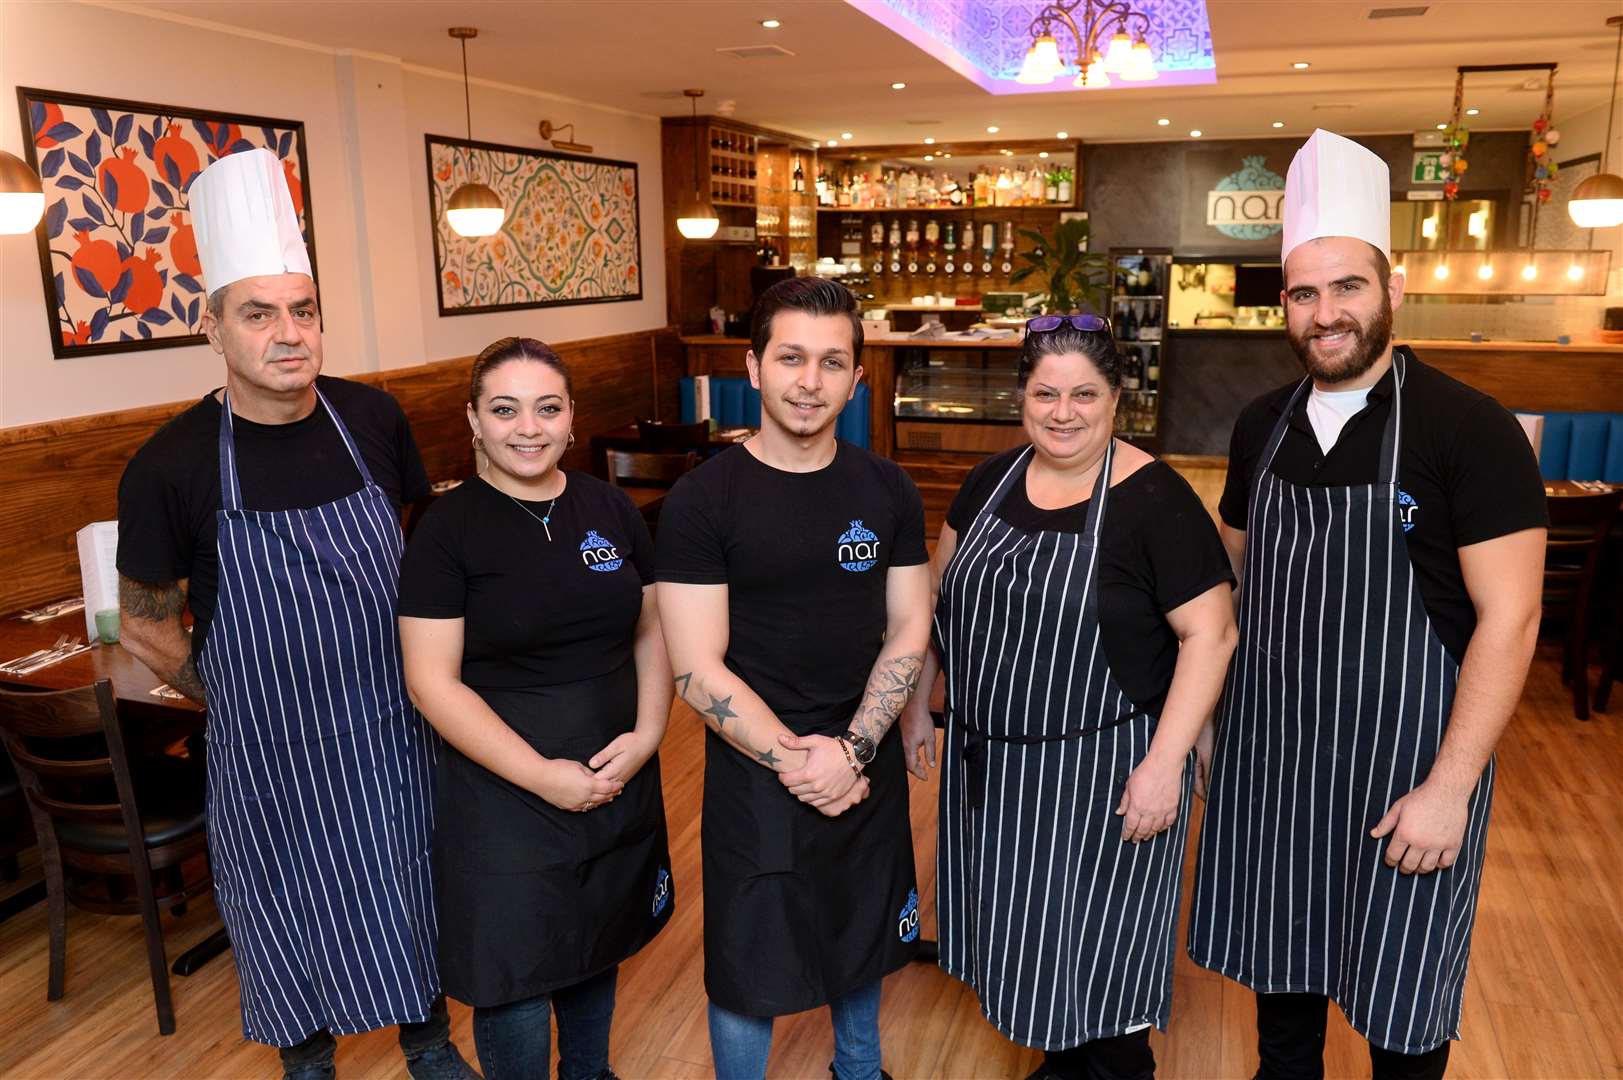 The staff at Nar Restaurant on Bridge Street, Inverness.